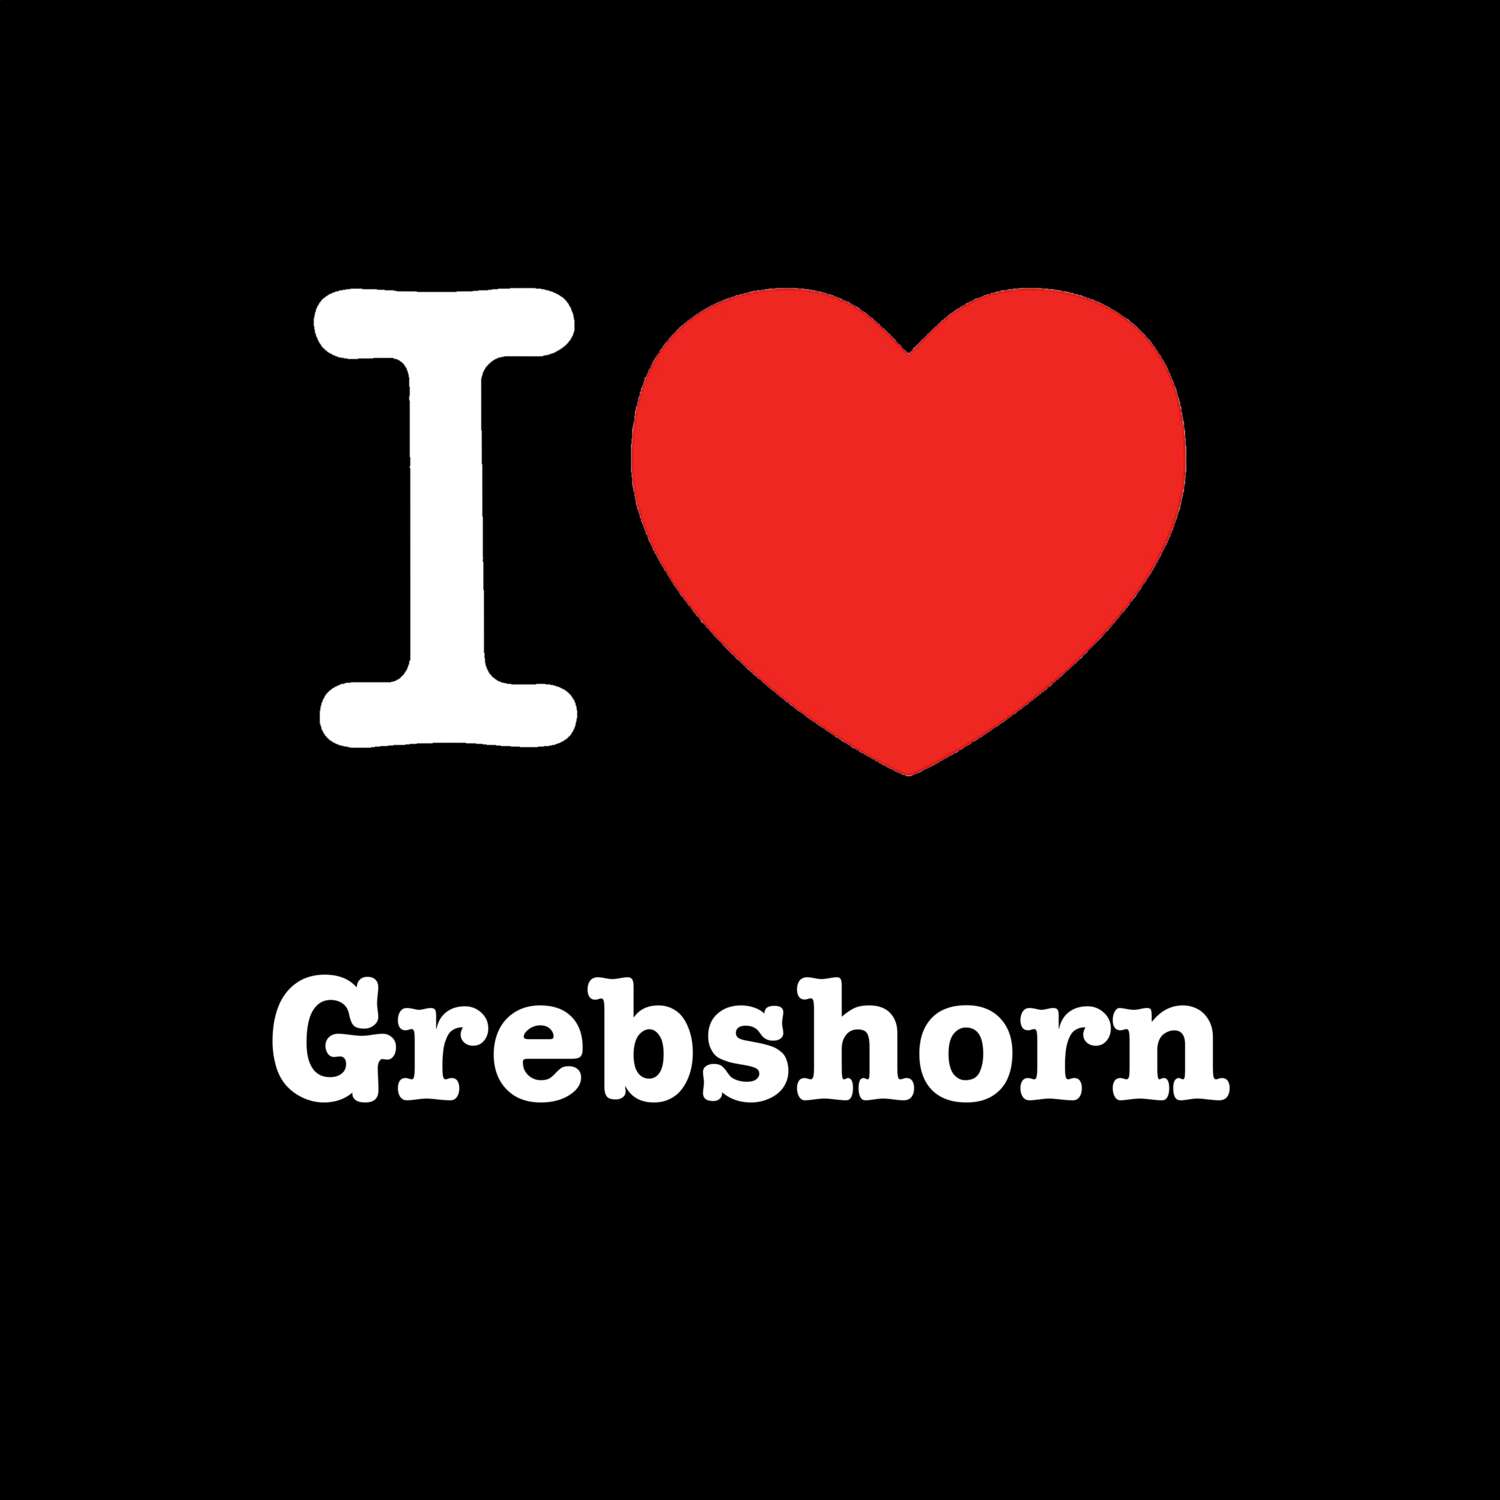 Grebshorn T-Shirt »I love«